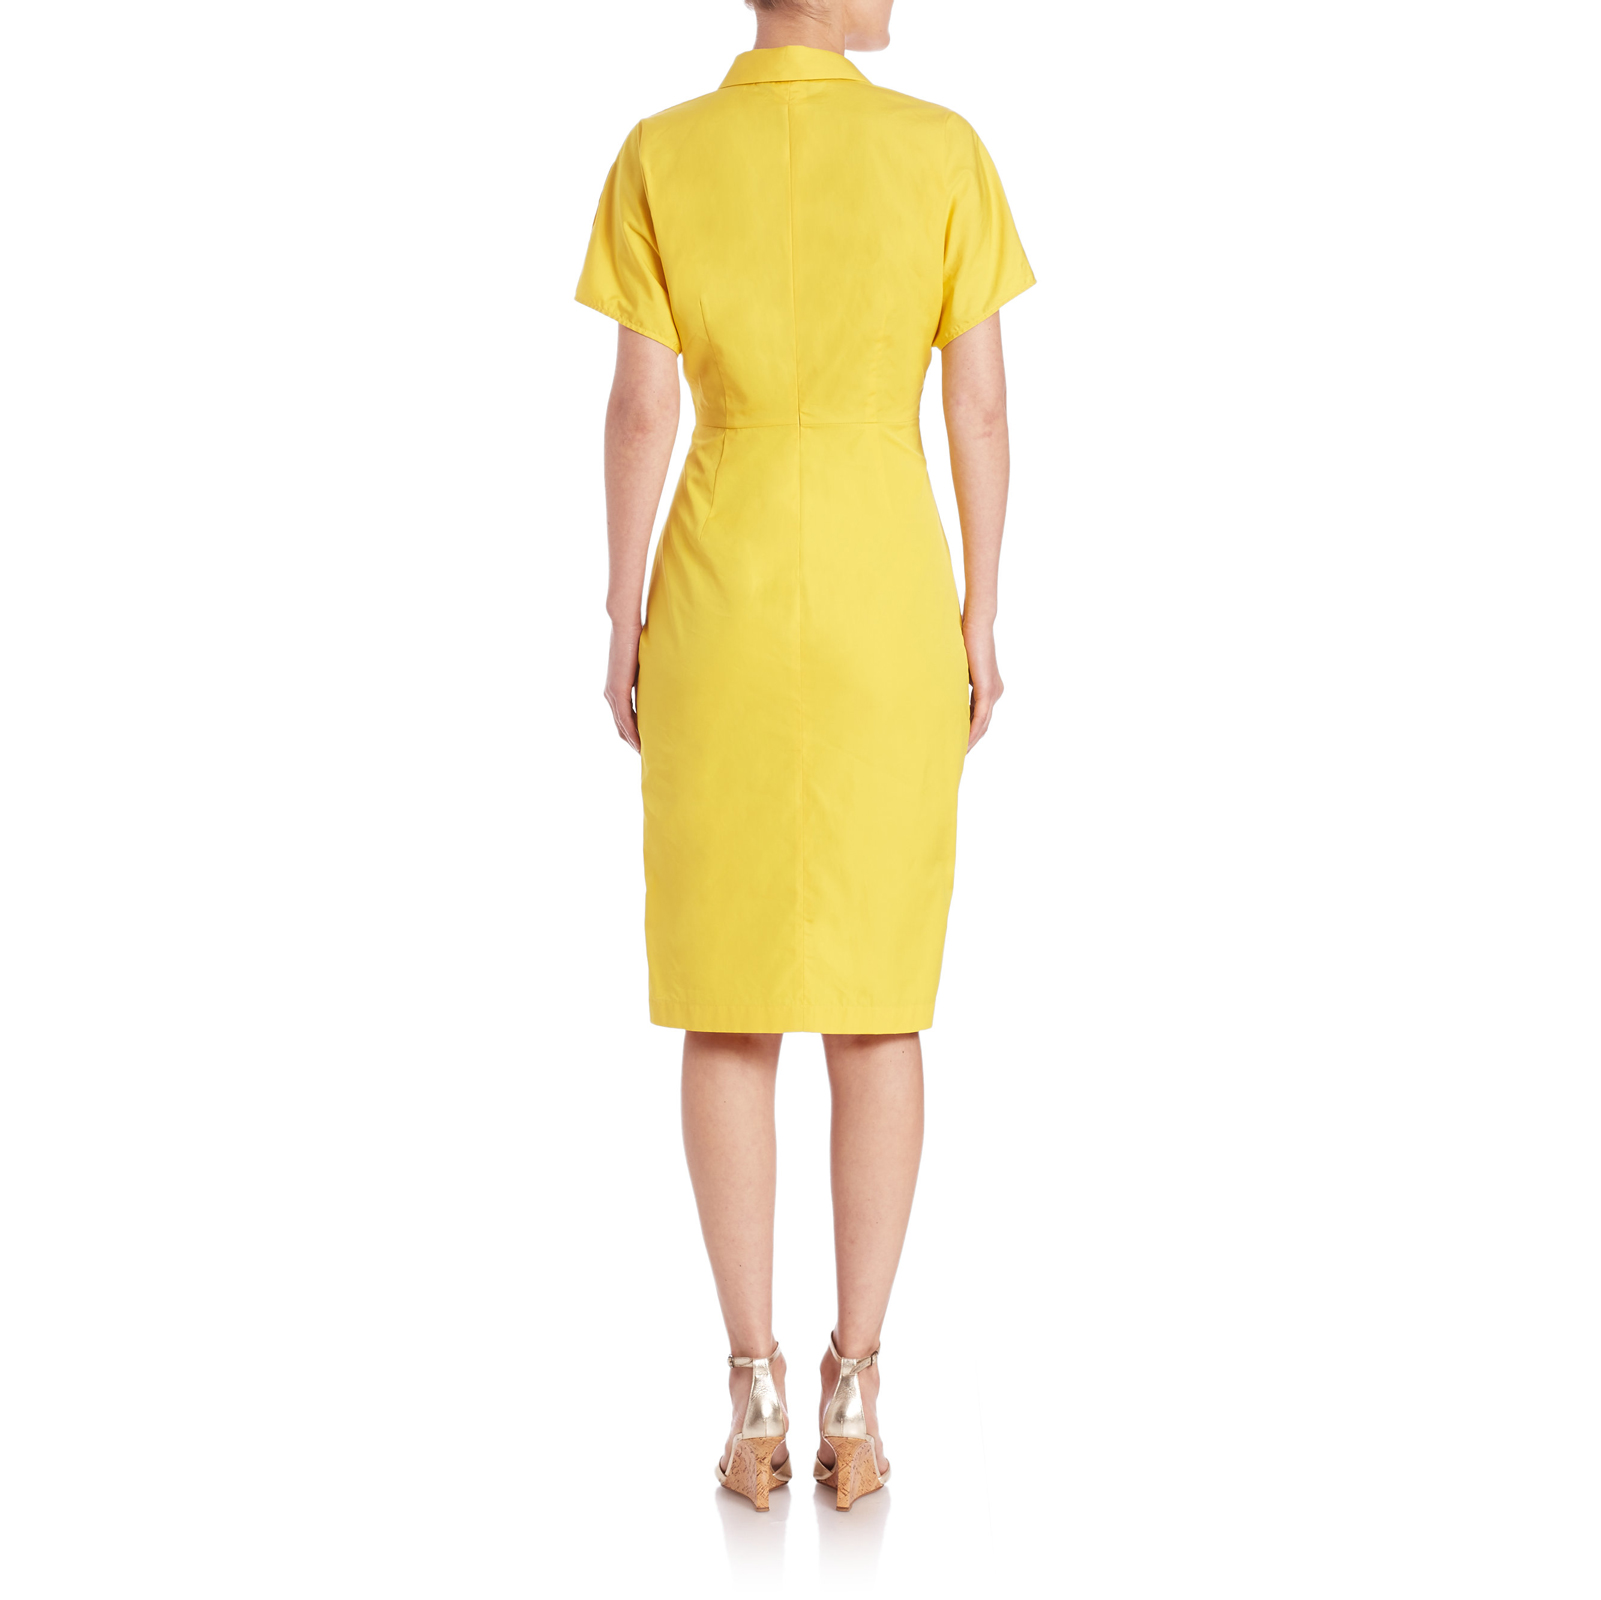 MAX MARA Women's Fred Yellow Ruched Cotton Poplin Dress $850 NWT | eBay